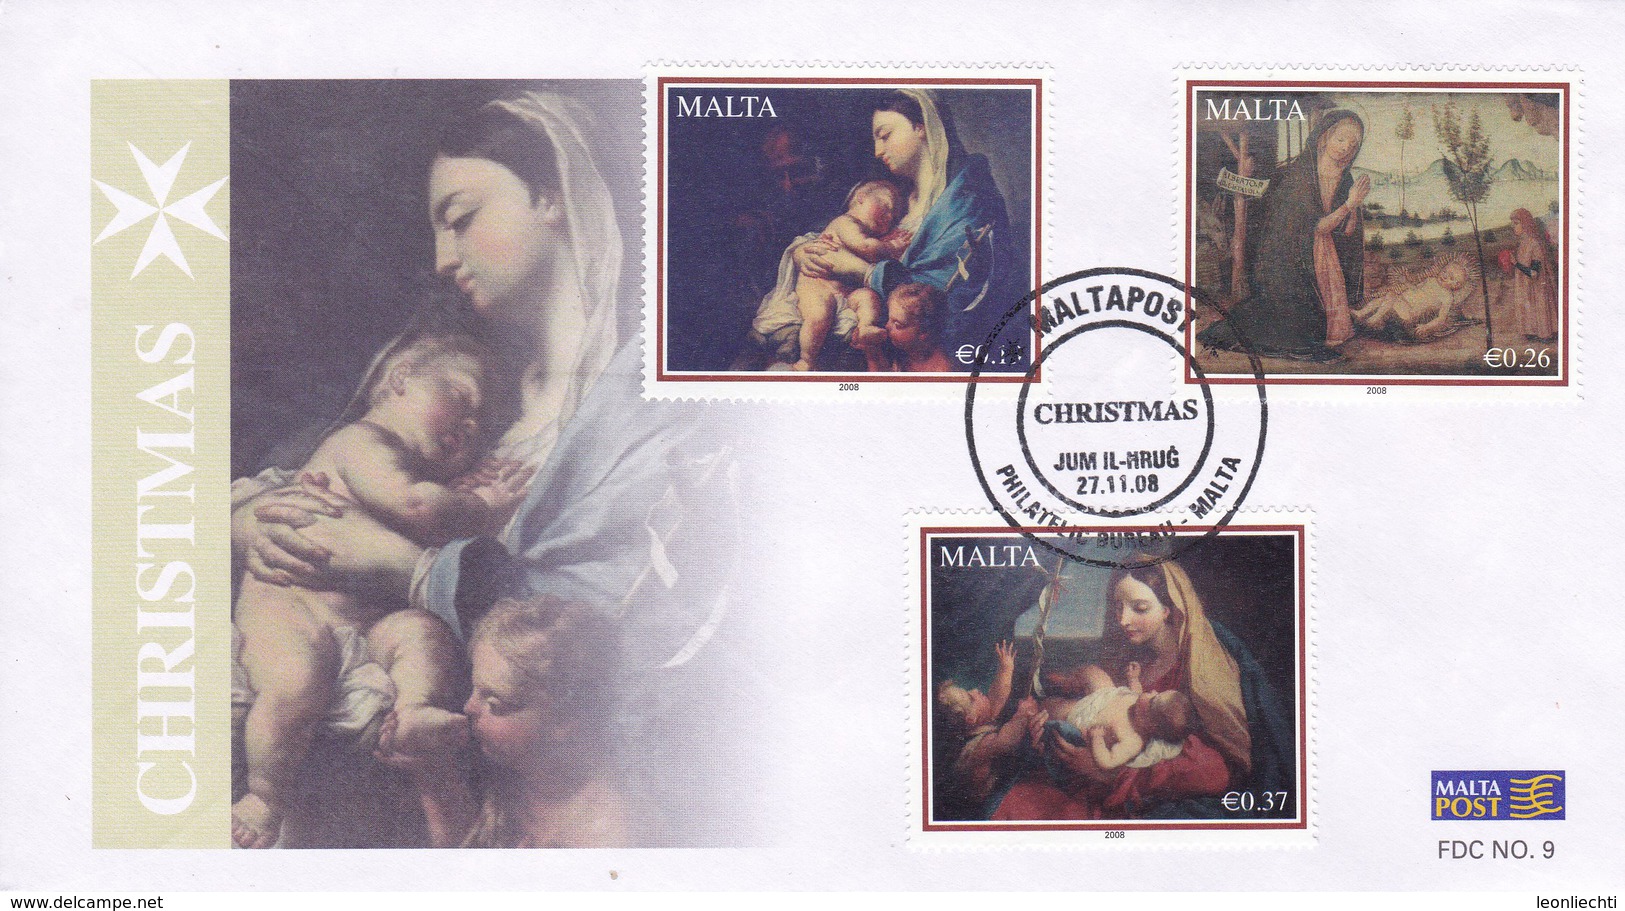 Malta, FDC N°. 9 . 27.11.08. Christmas - Christianisme